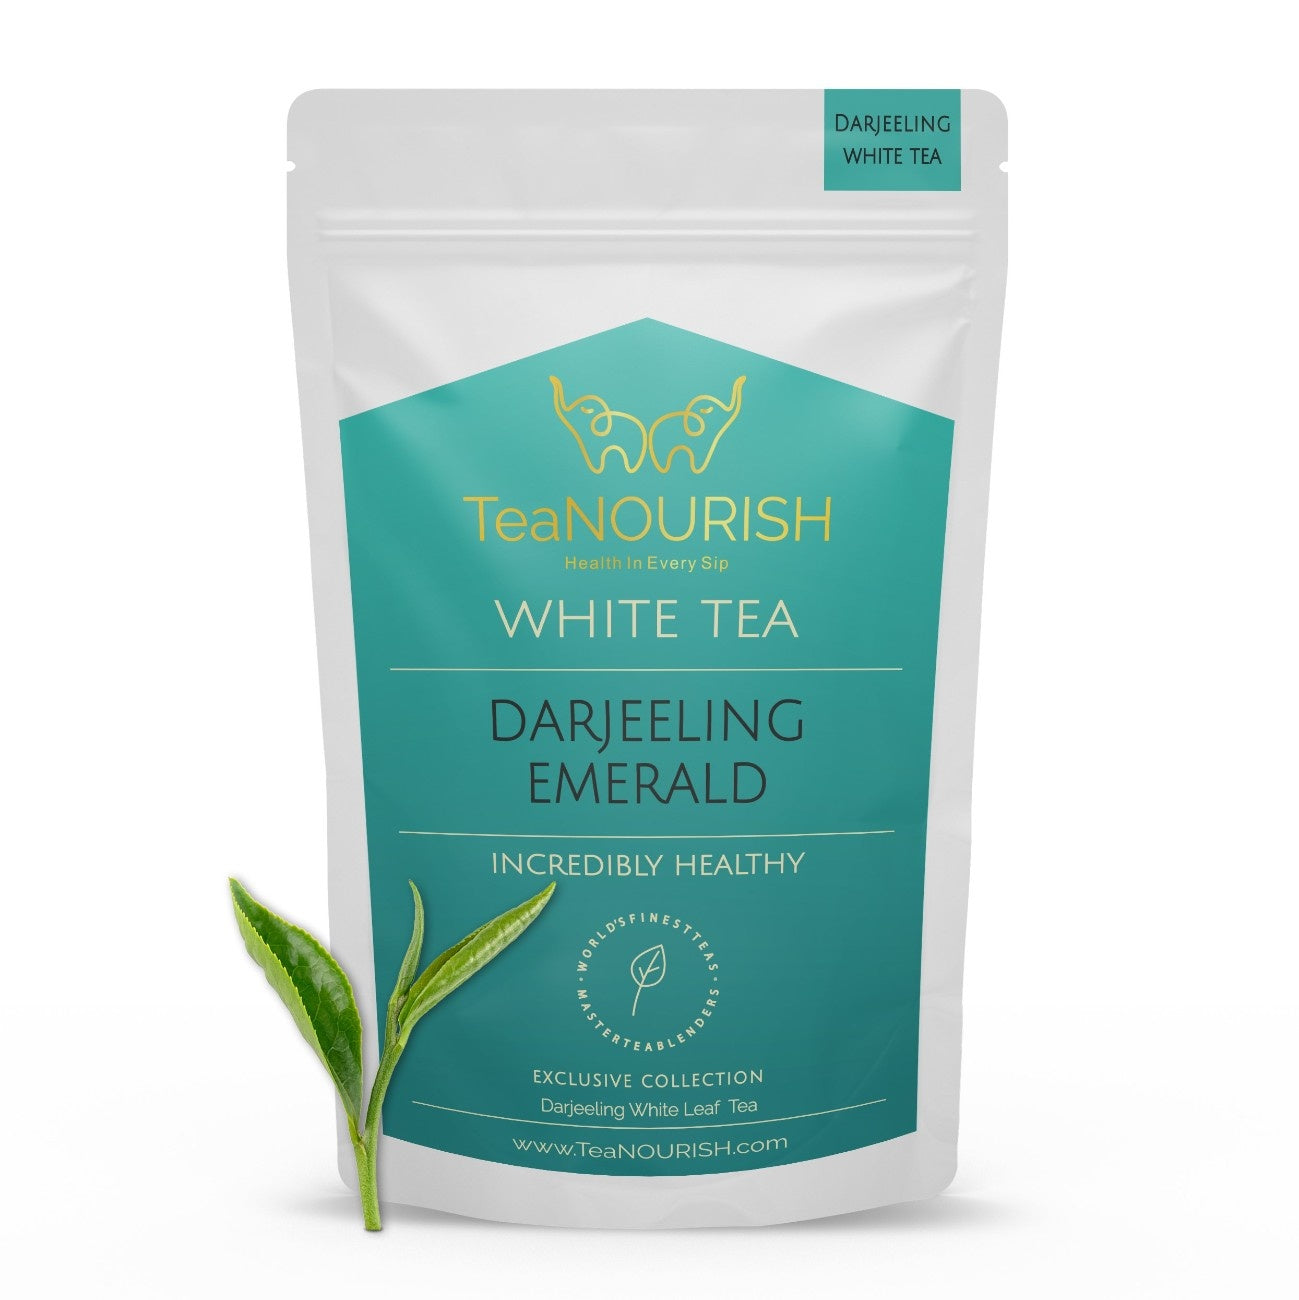 Darjeeling Emerald White Tea	